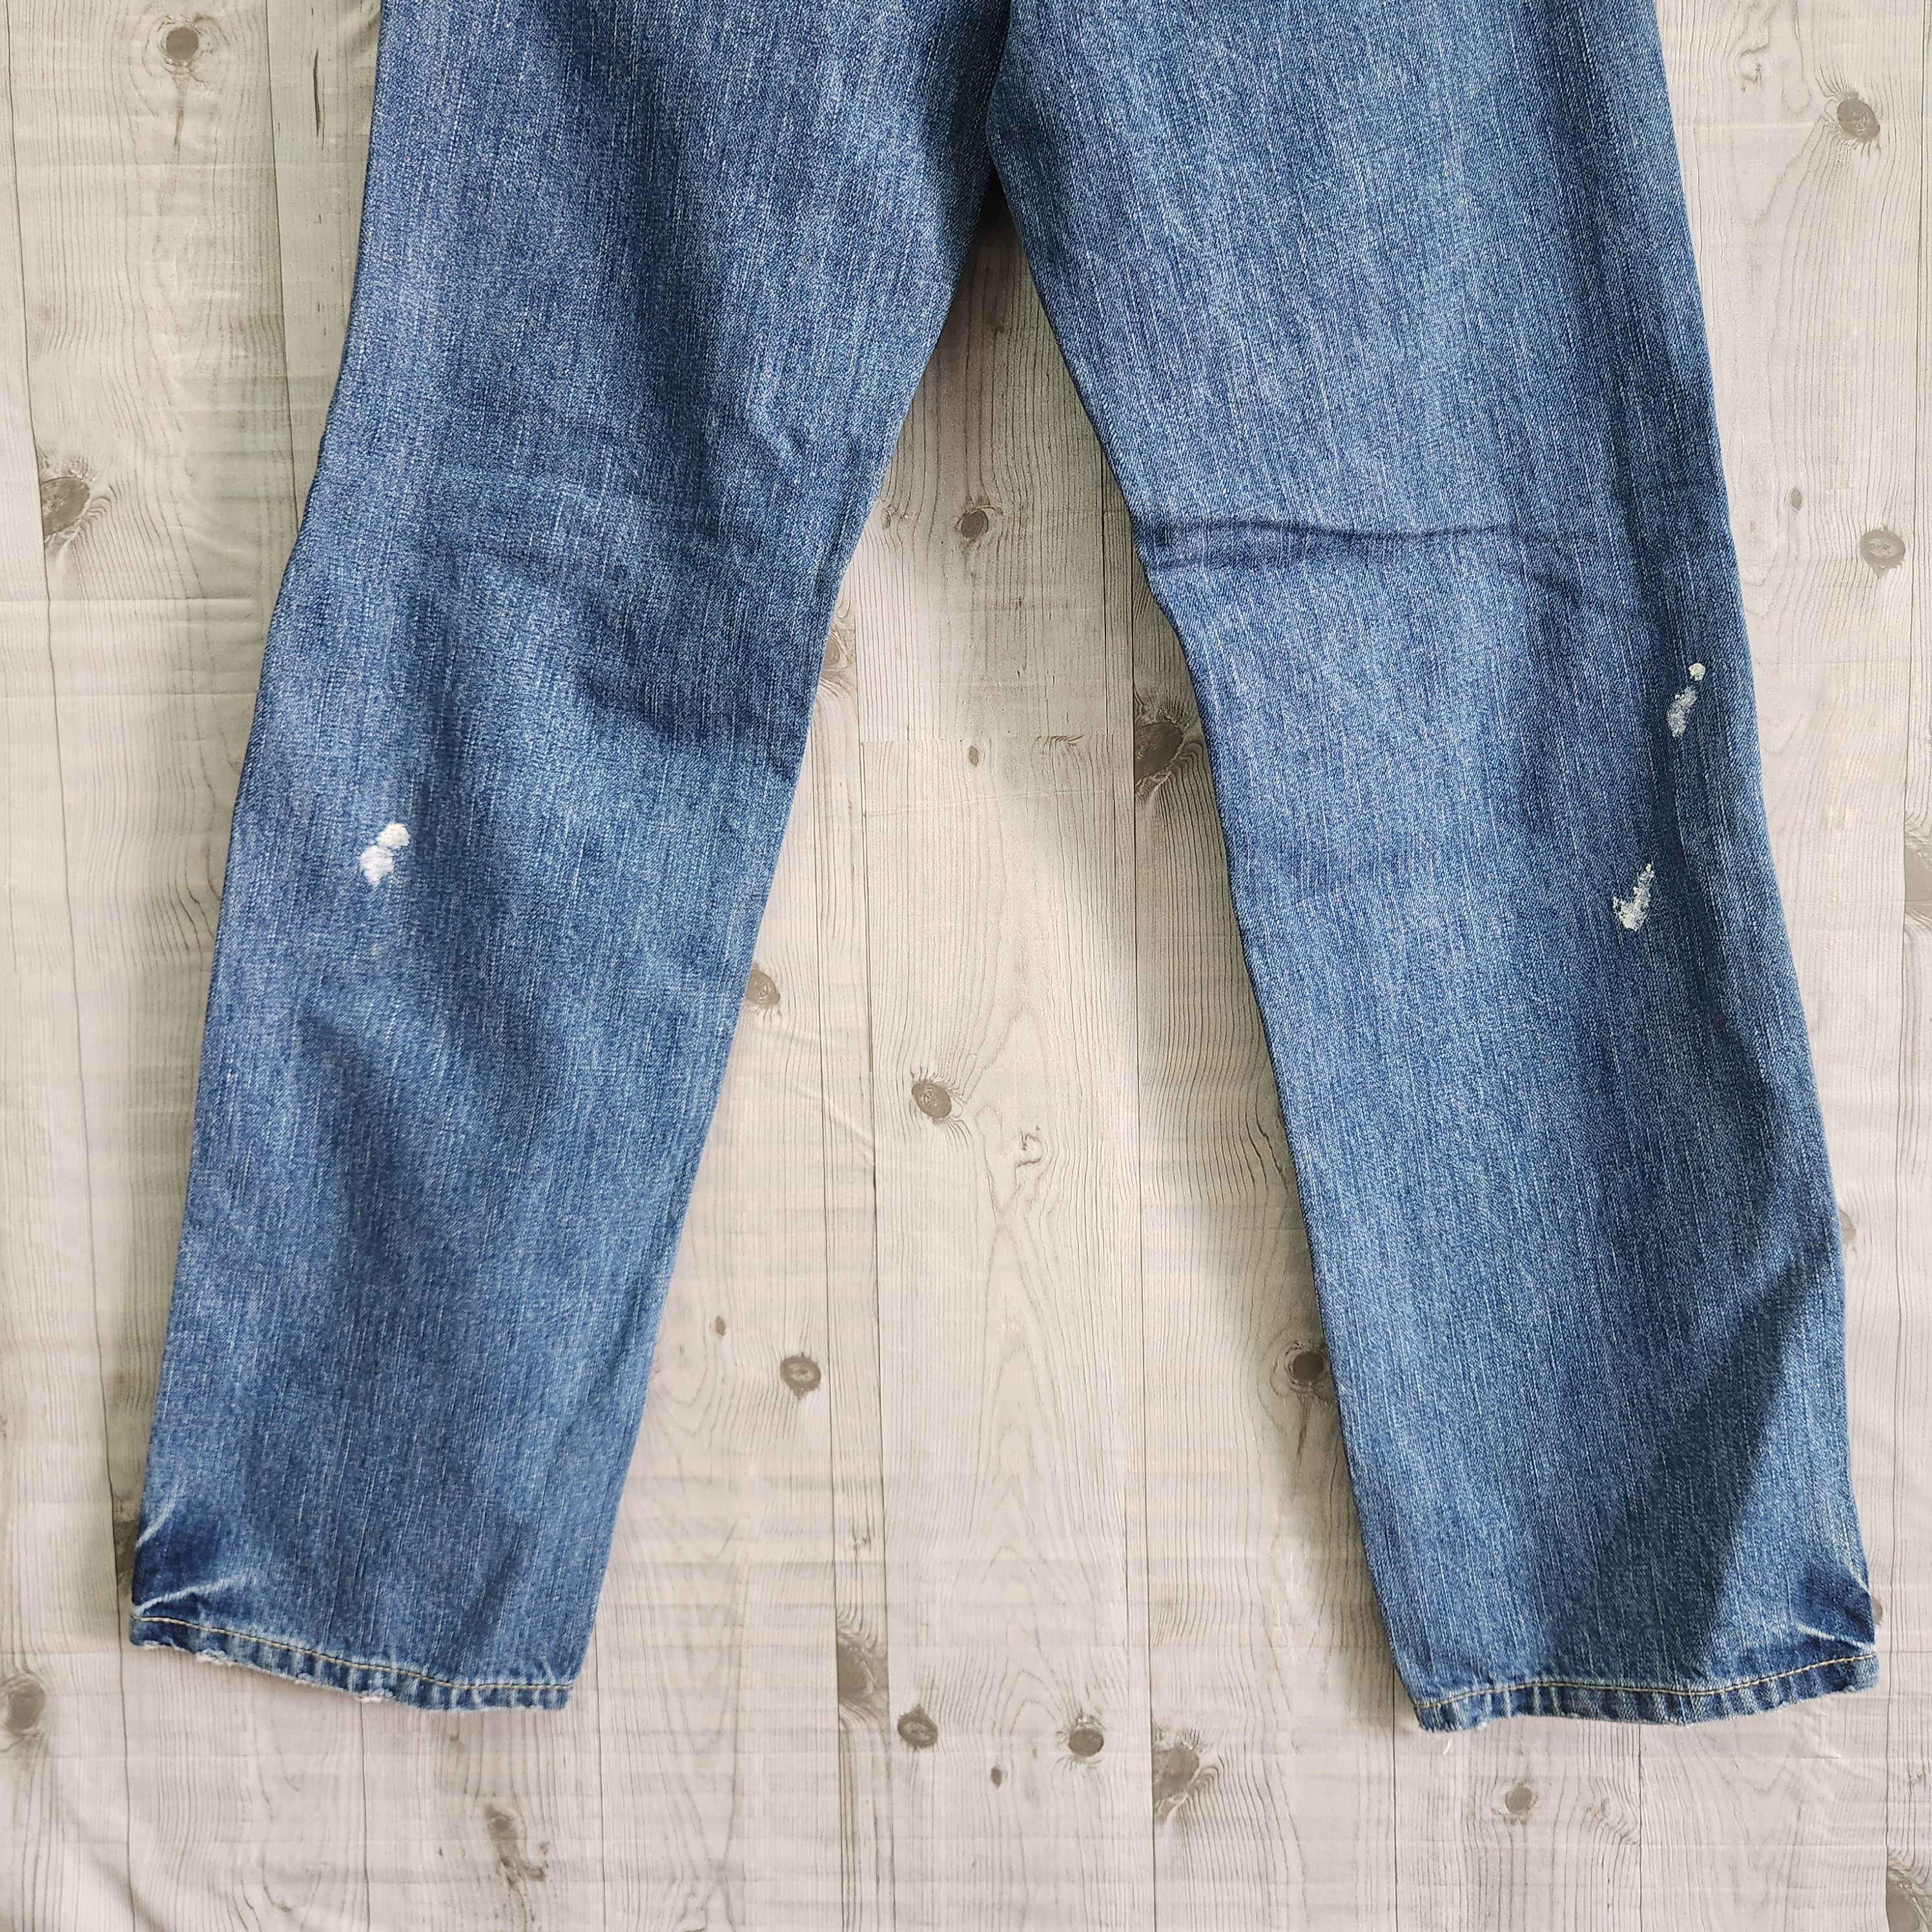 Distressed Denim - Distressed Sashiko Denim Cube Sugar Japanese Jeans - 2